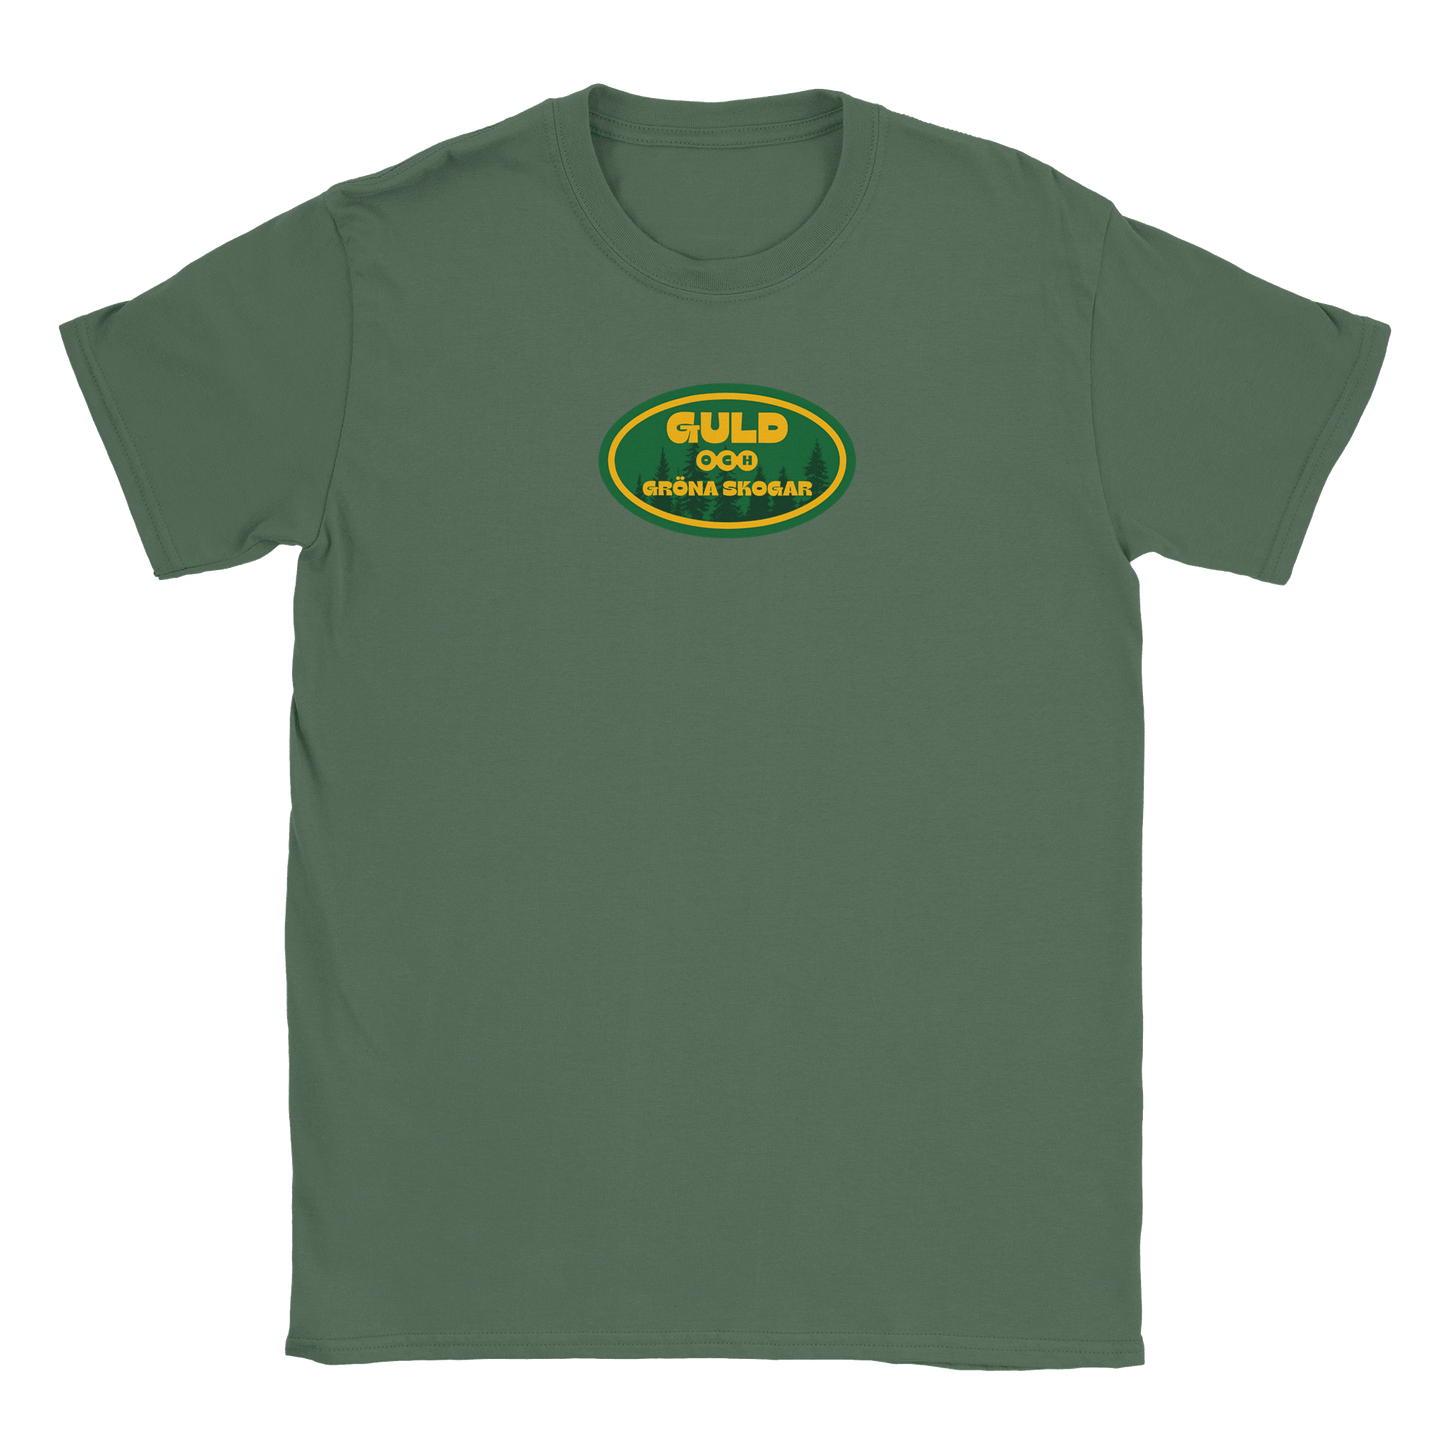 Guld och gröna skogar - T-shirt Militärgrön